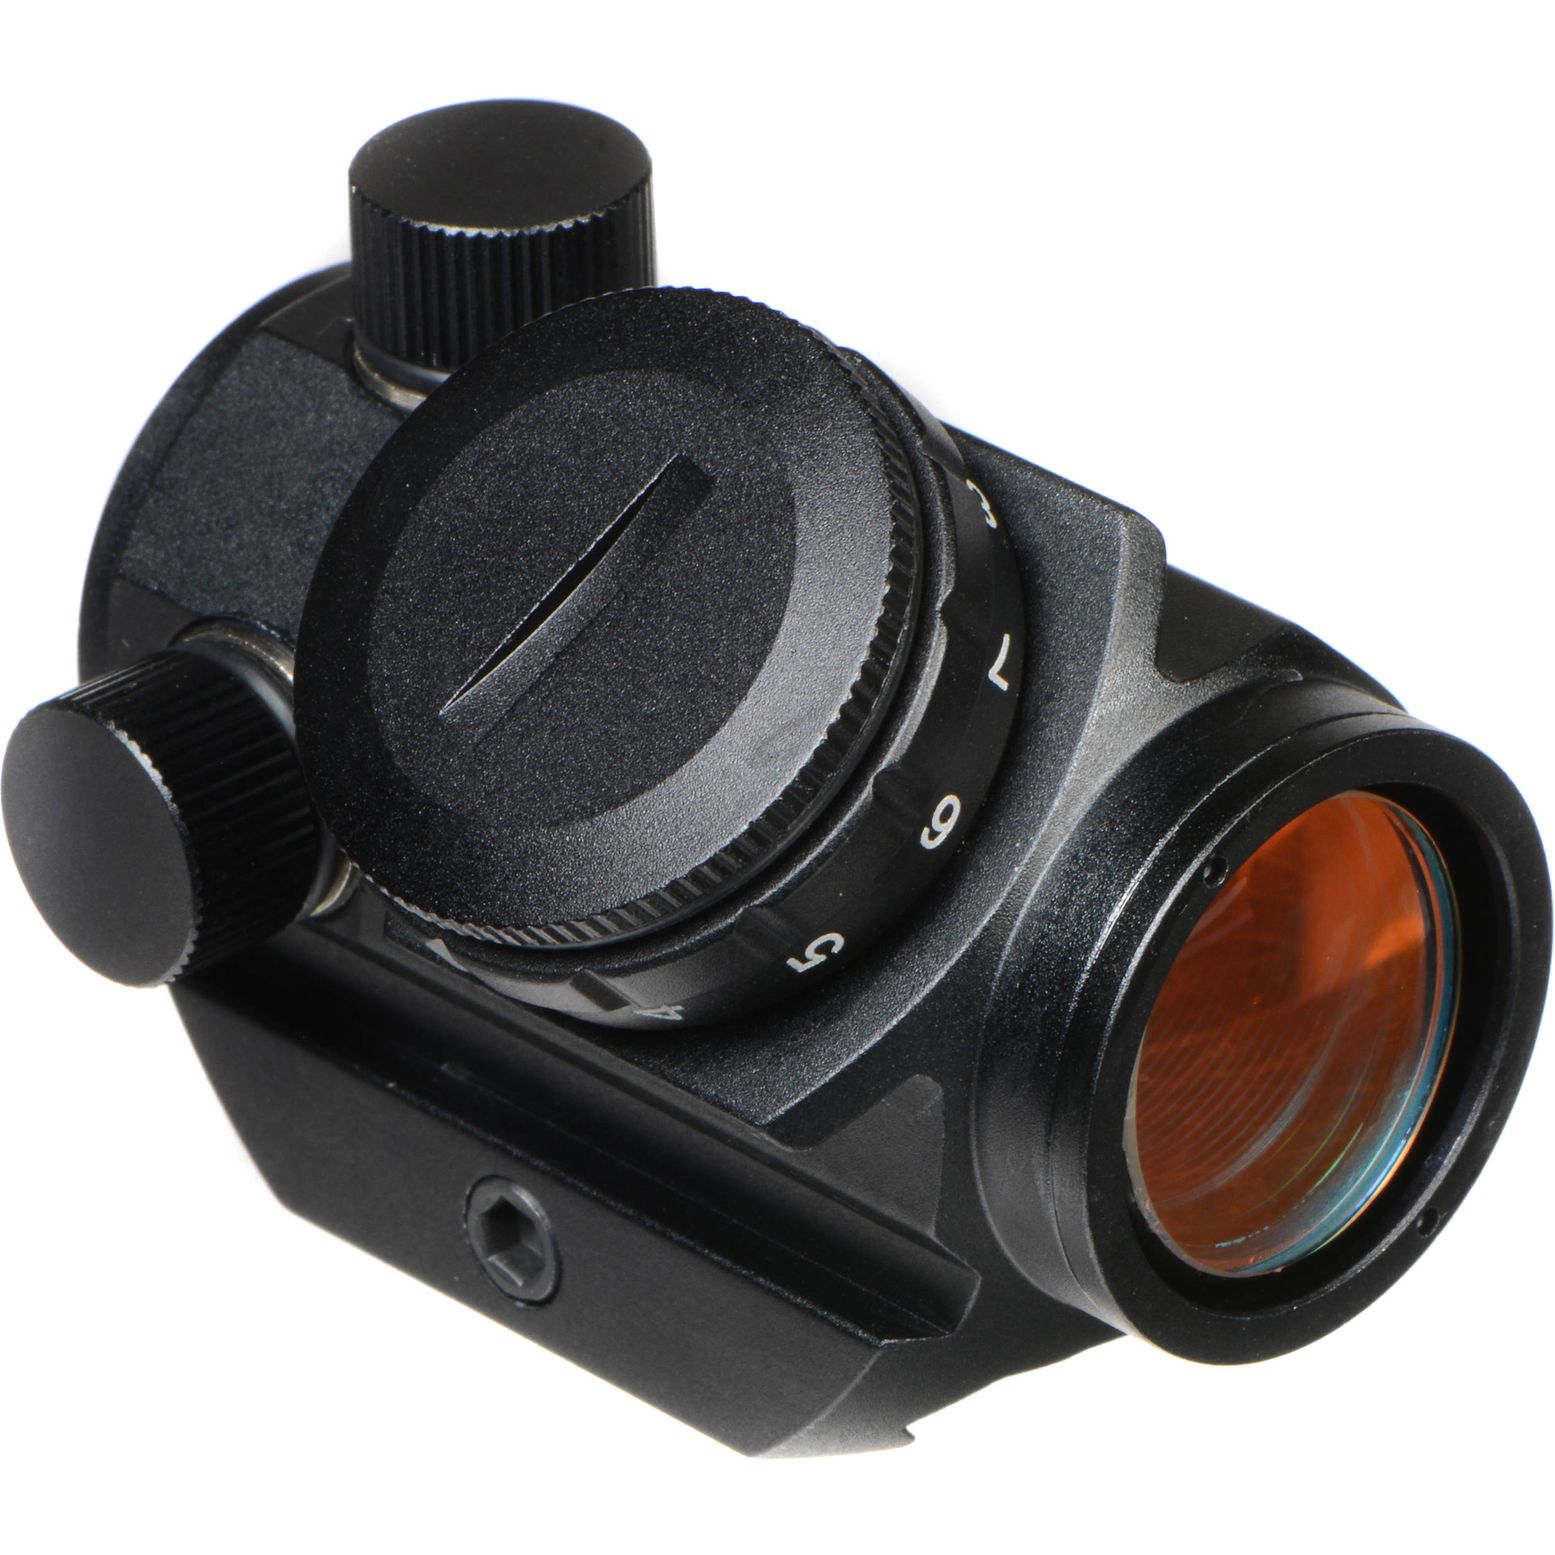 get-the-best-deals-bushnell-trs-25-red-dot-optics-hunting-scope